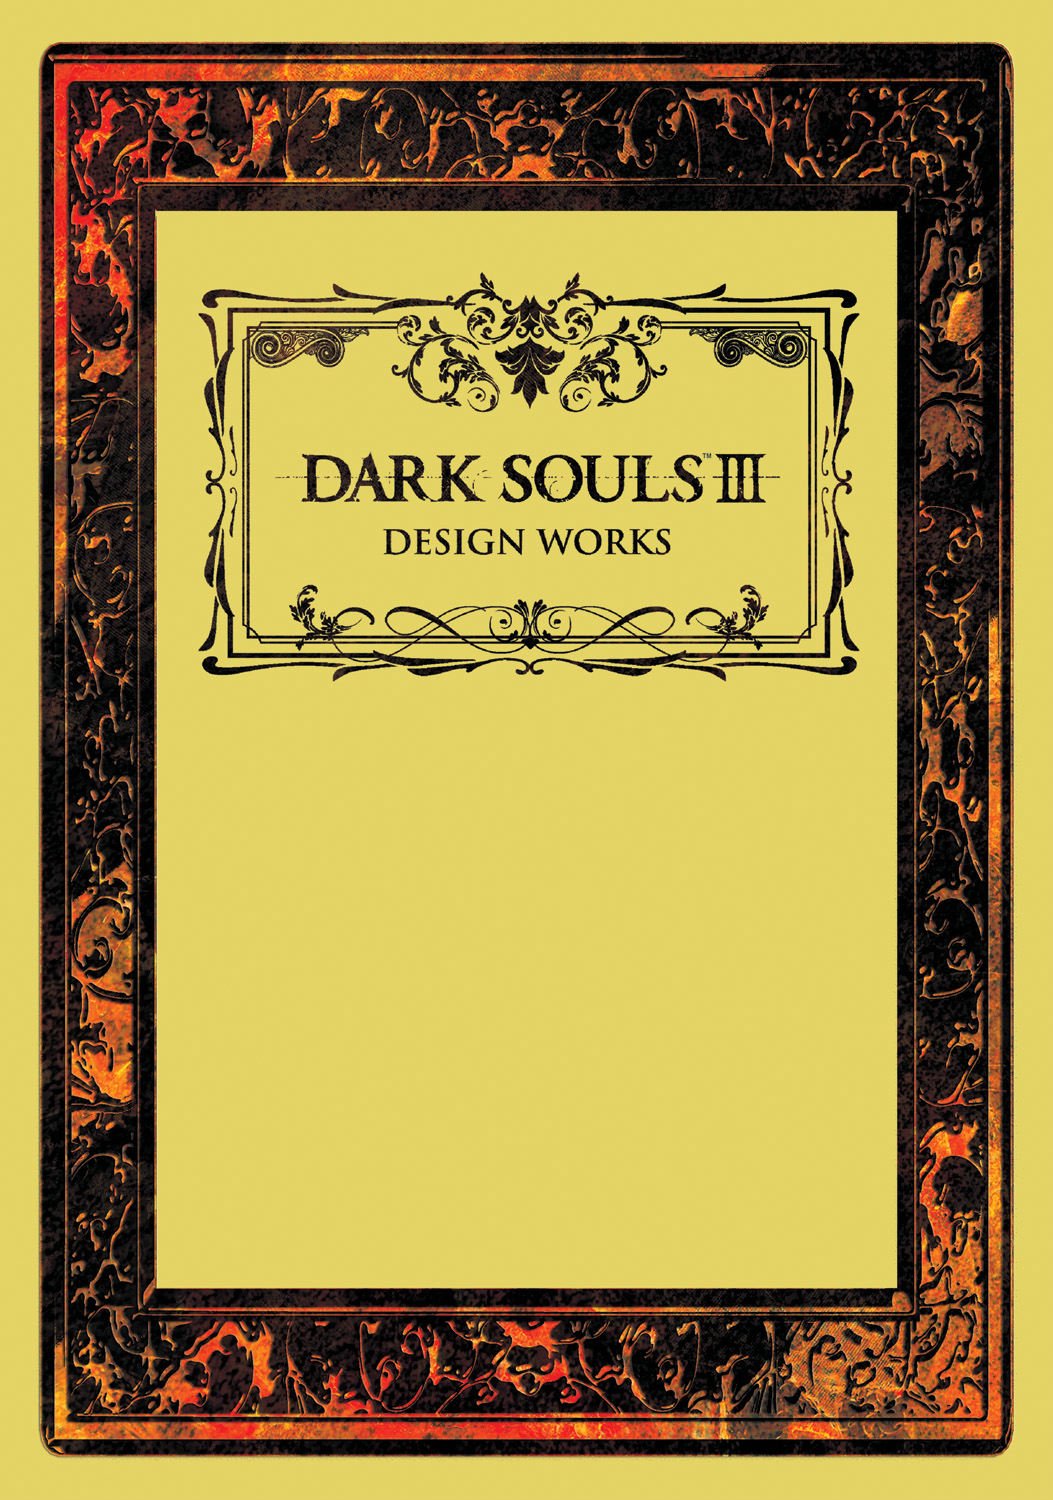 Dark Souls III: Design Works data